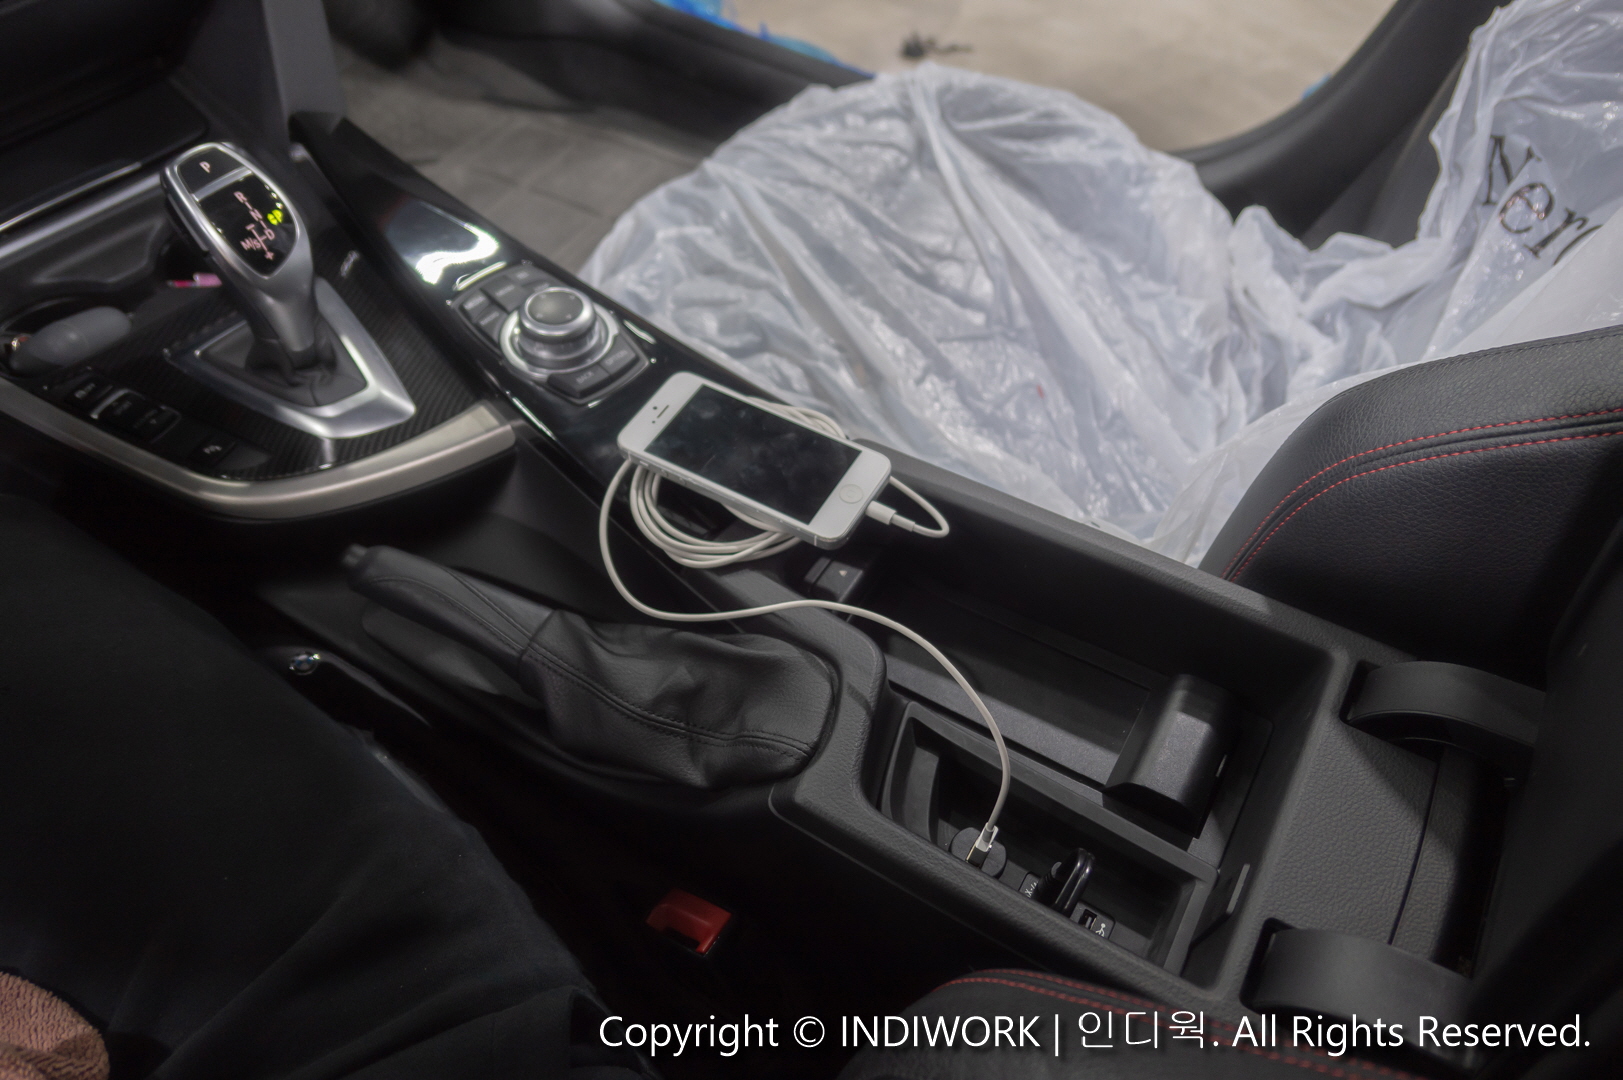 Apple Carplay, Google Android Auto,USB port for BMW F30 "SCB-NBT"